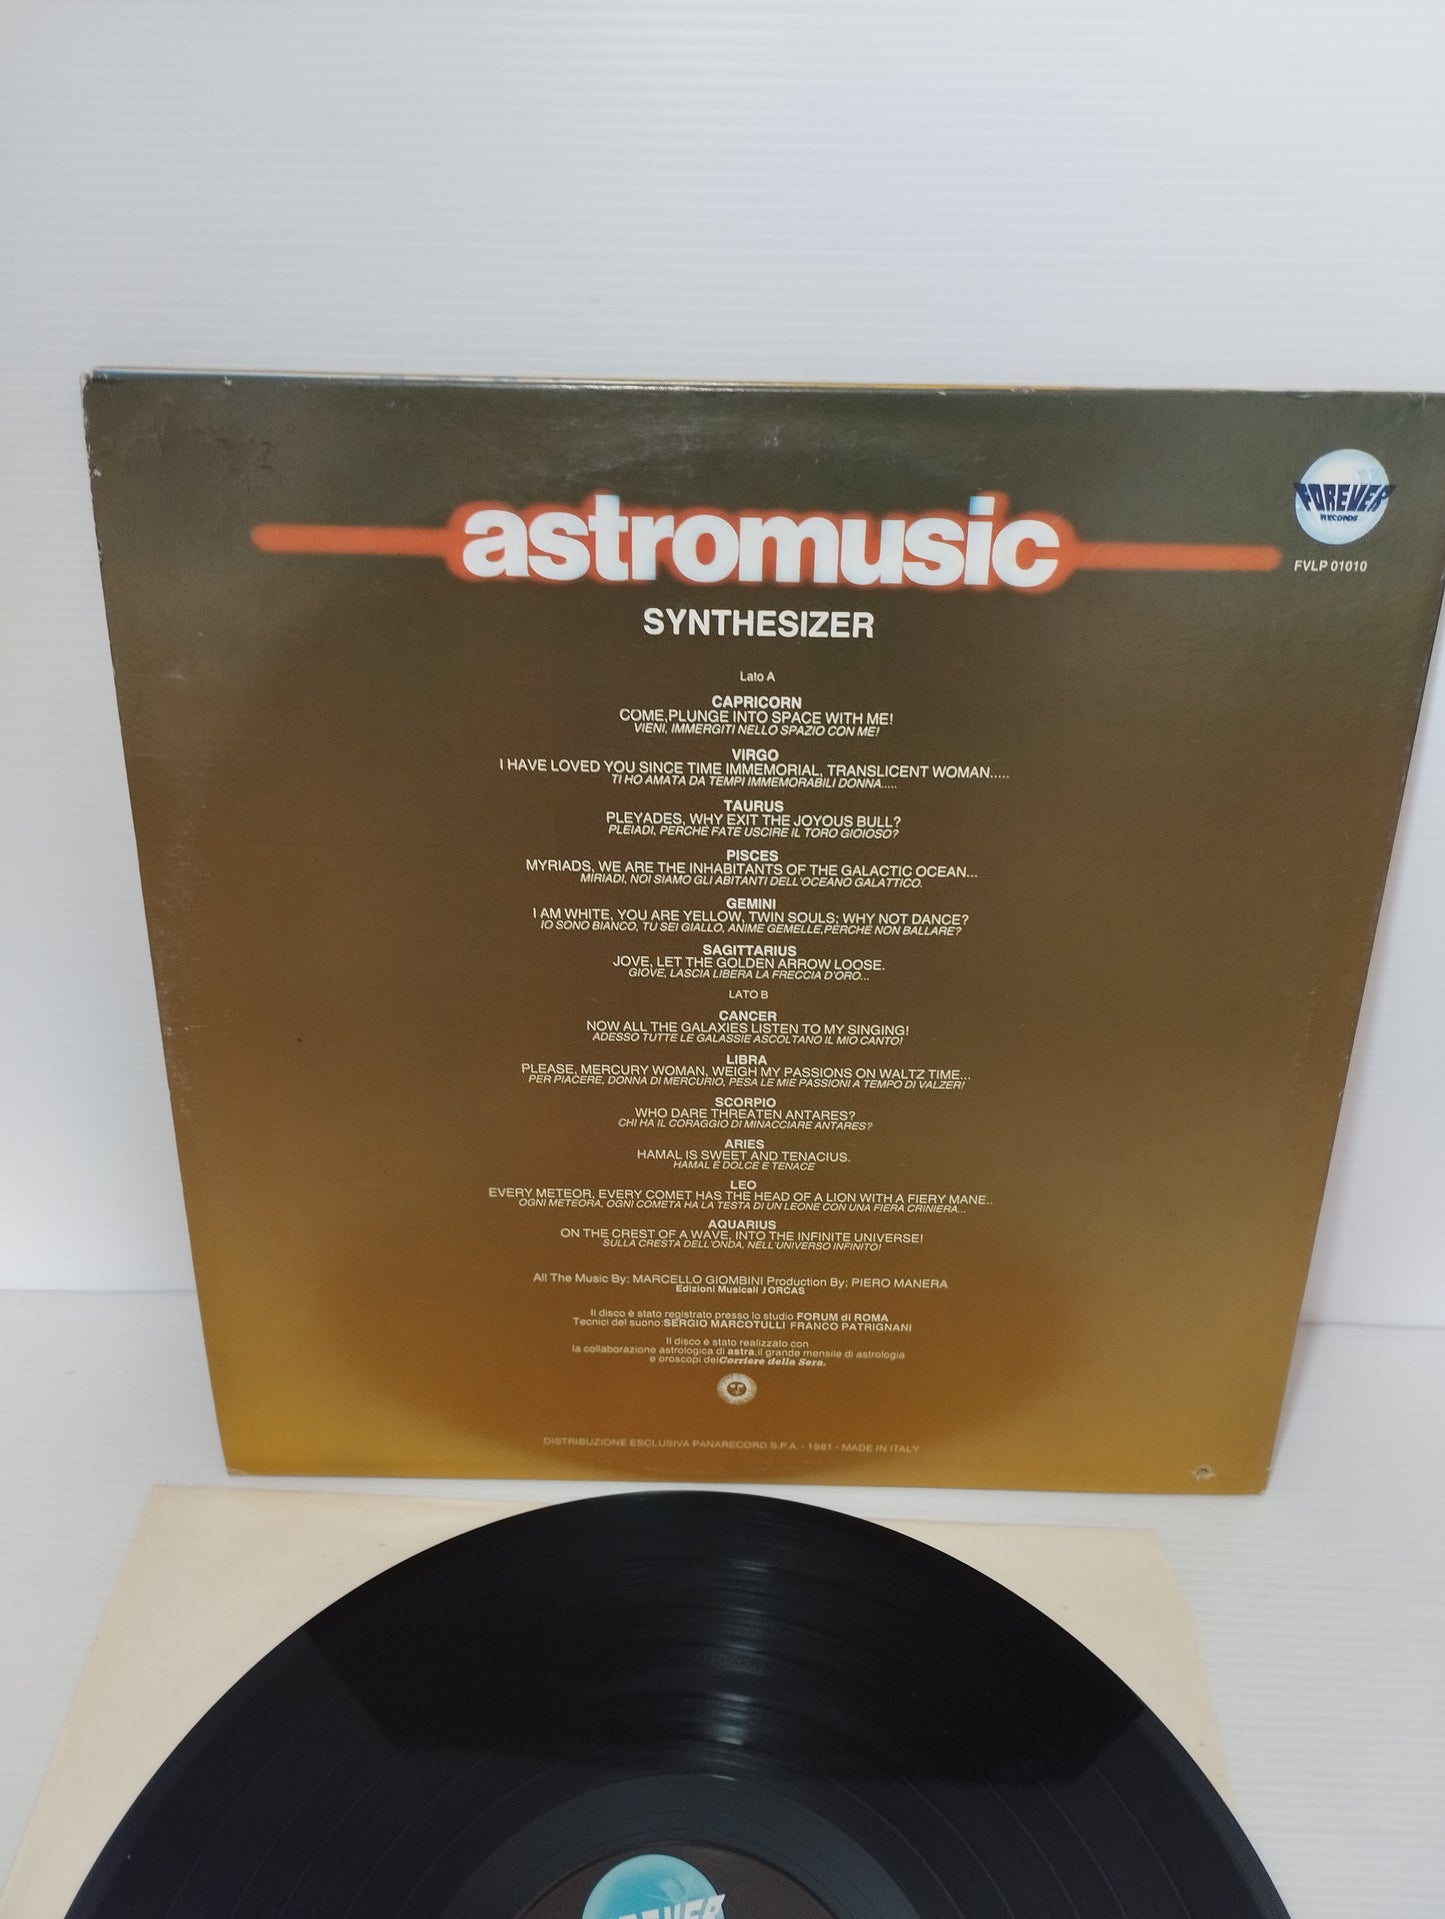 Lp 33 giri "AstroMusic Synthesizer" di Marcello Giombini
Genere :Electronic